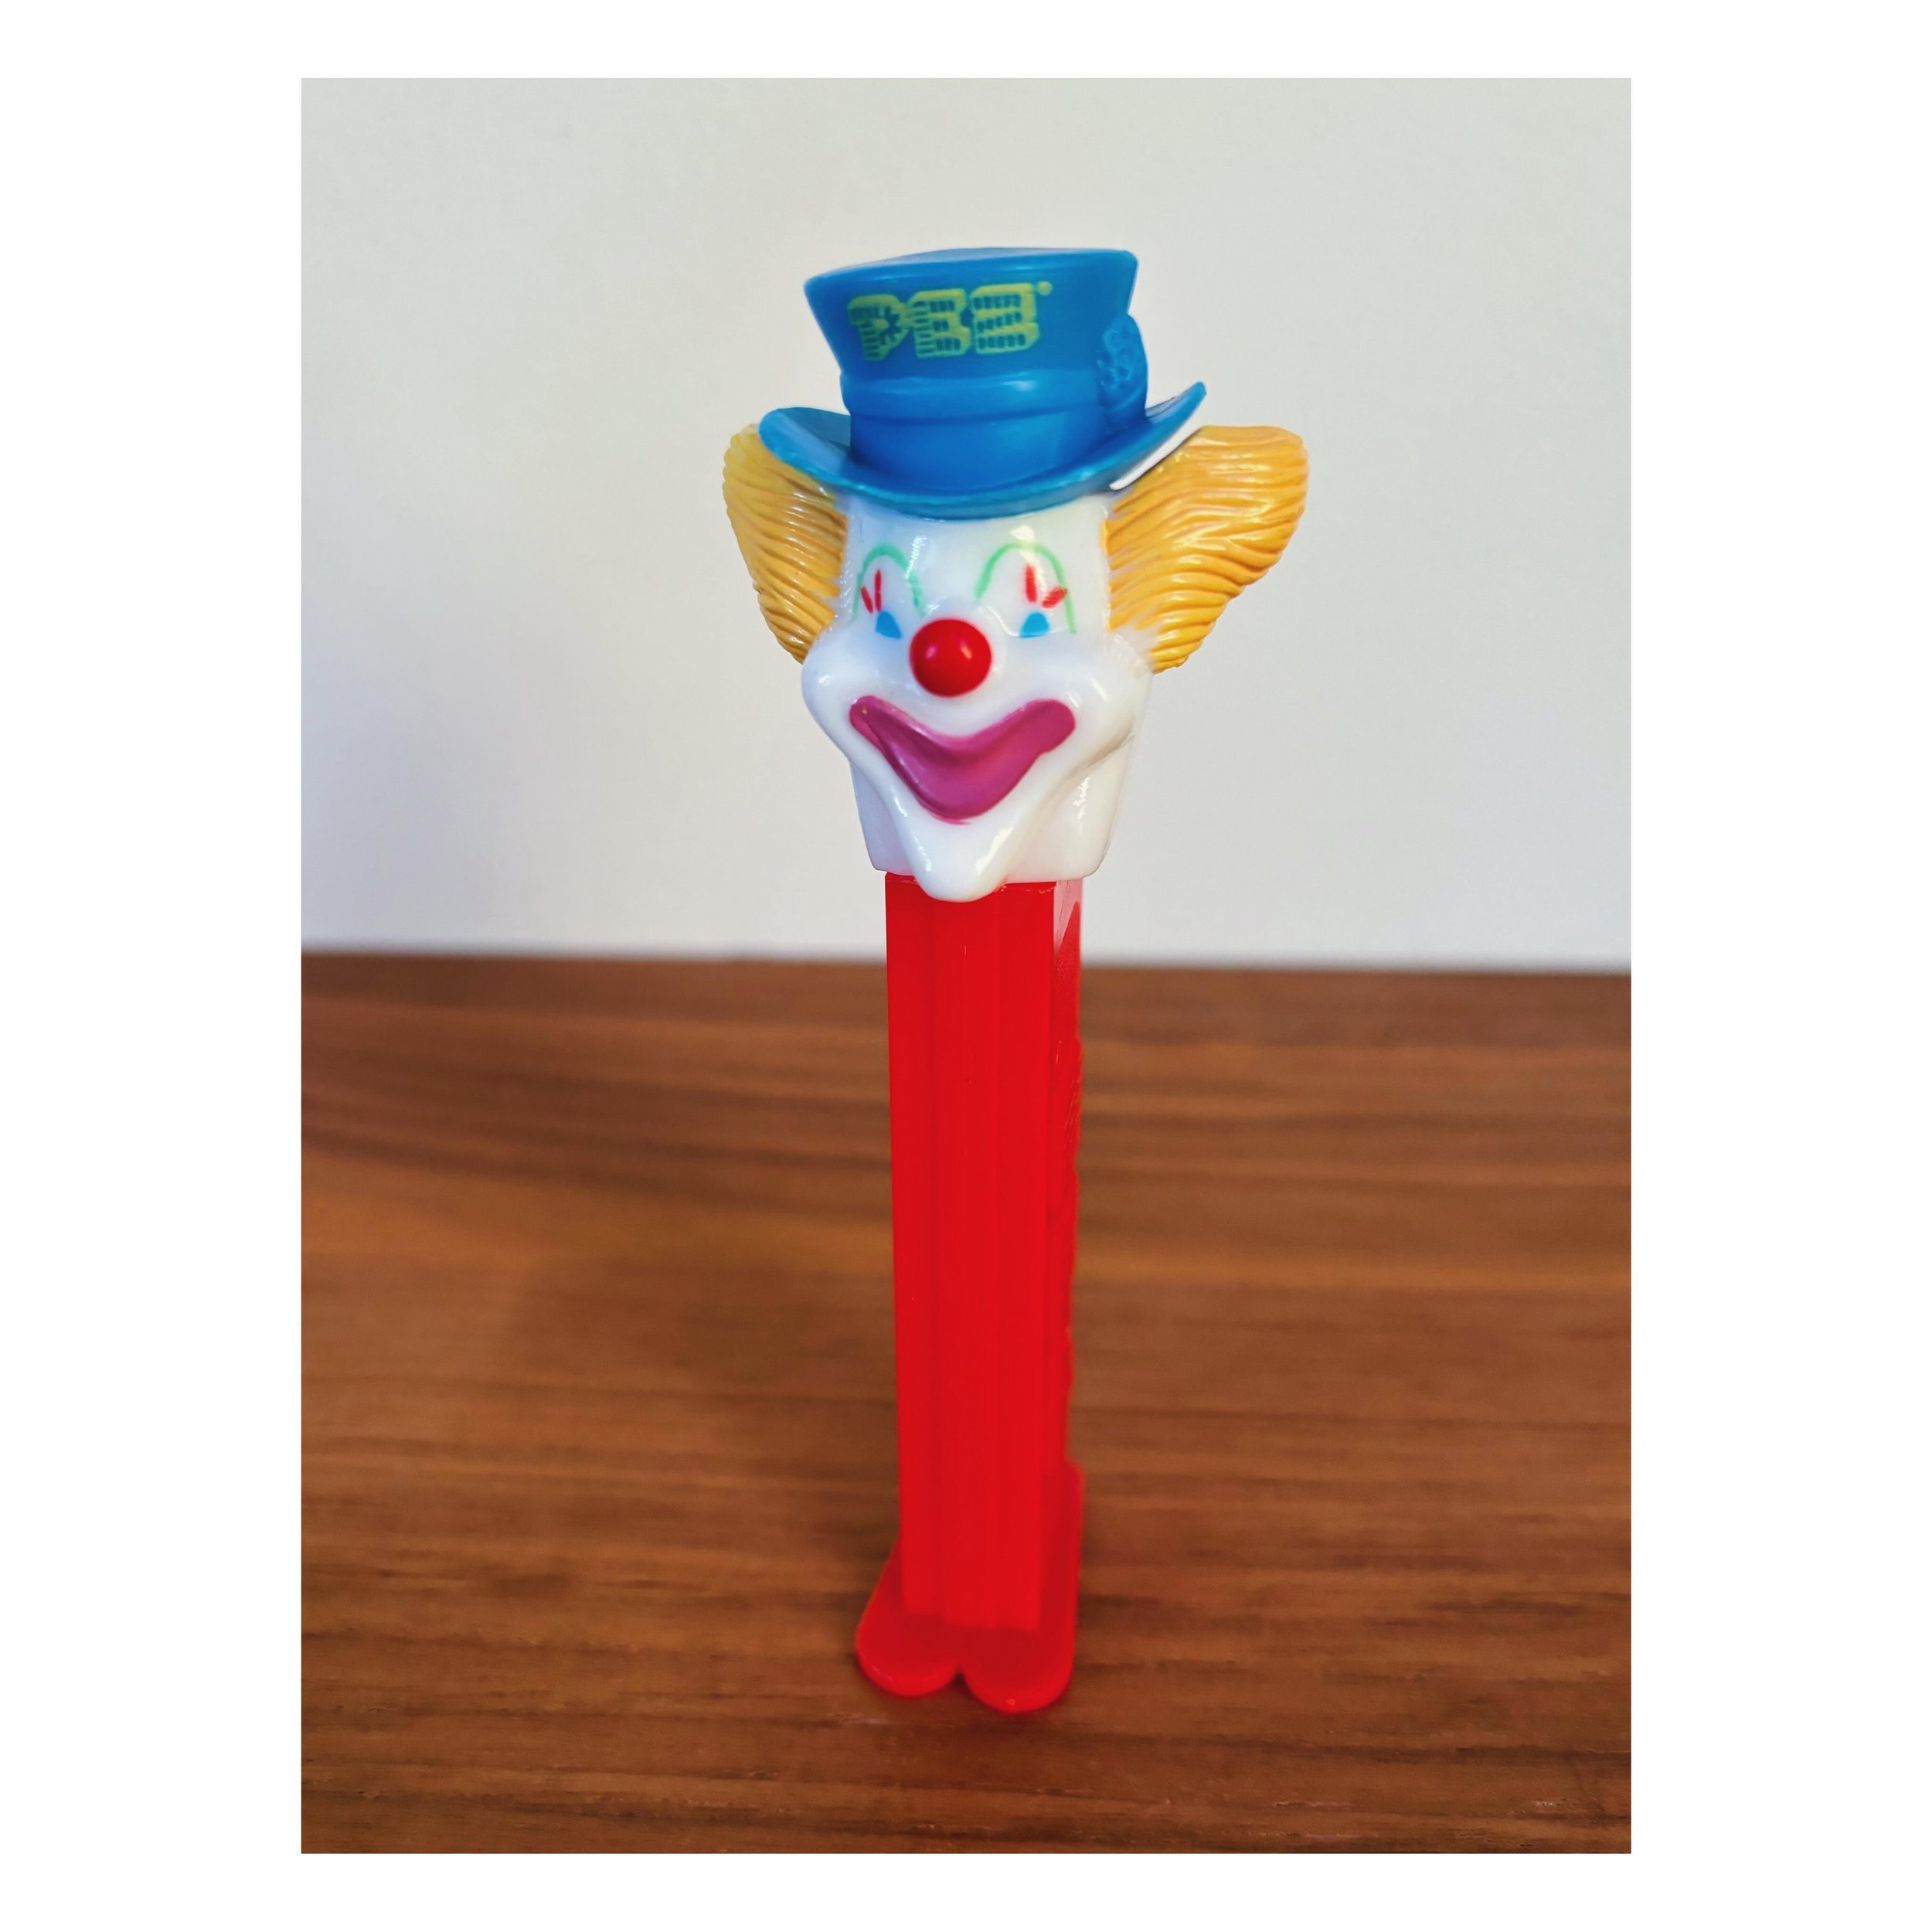 Stop clowning around 🤡
.
.
#pez #pezdispenser #candy #peterpez